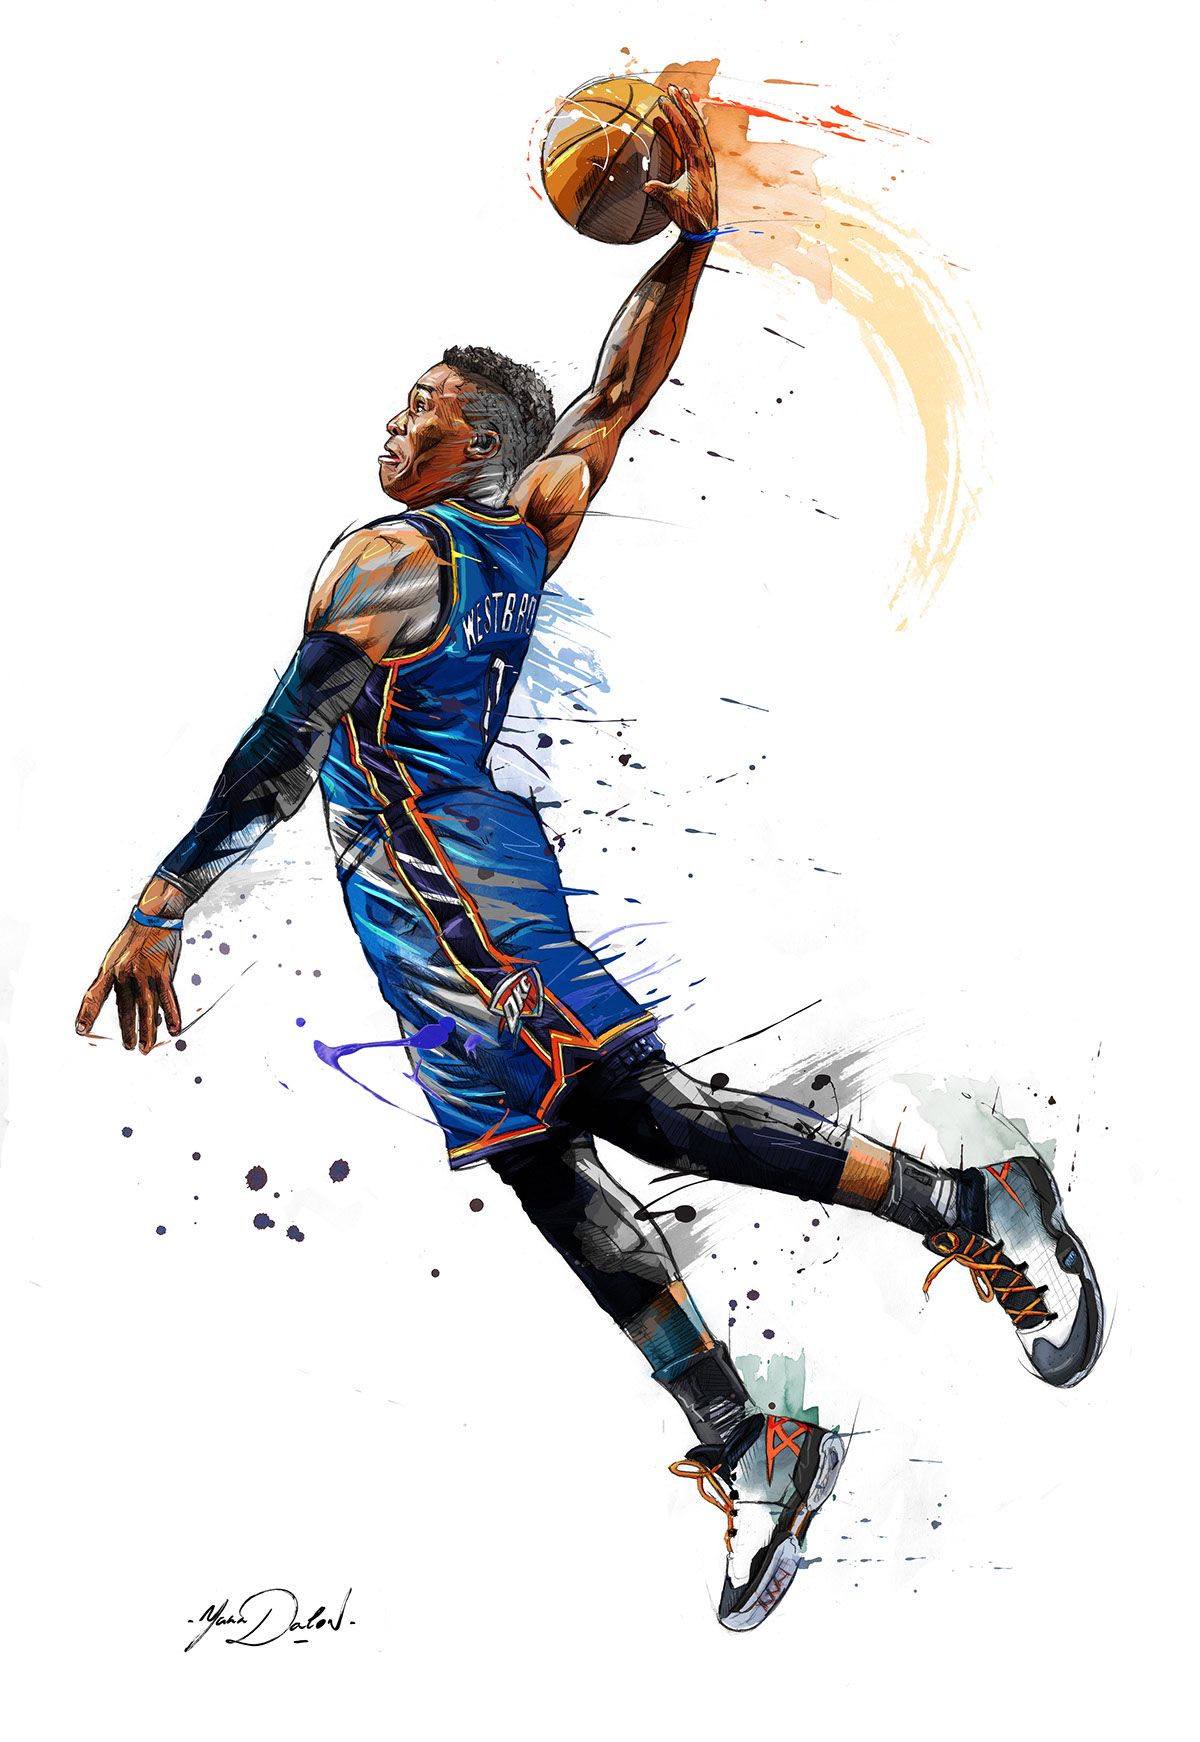 Russell Westbrook Wallpaper - Basketball Player Dunking Drawing - HD Wallpaper 